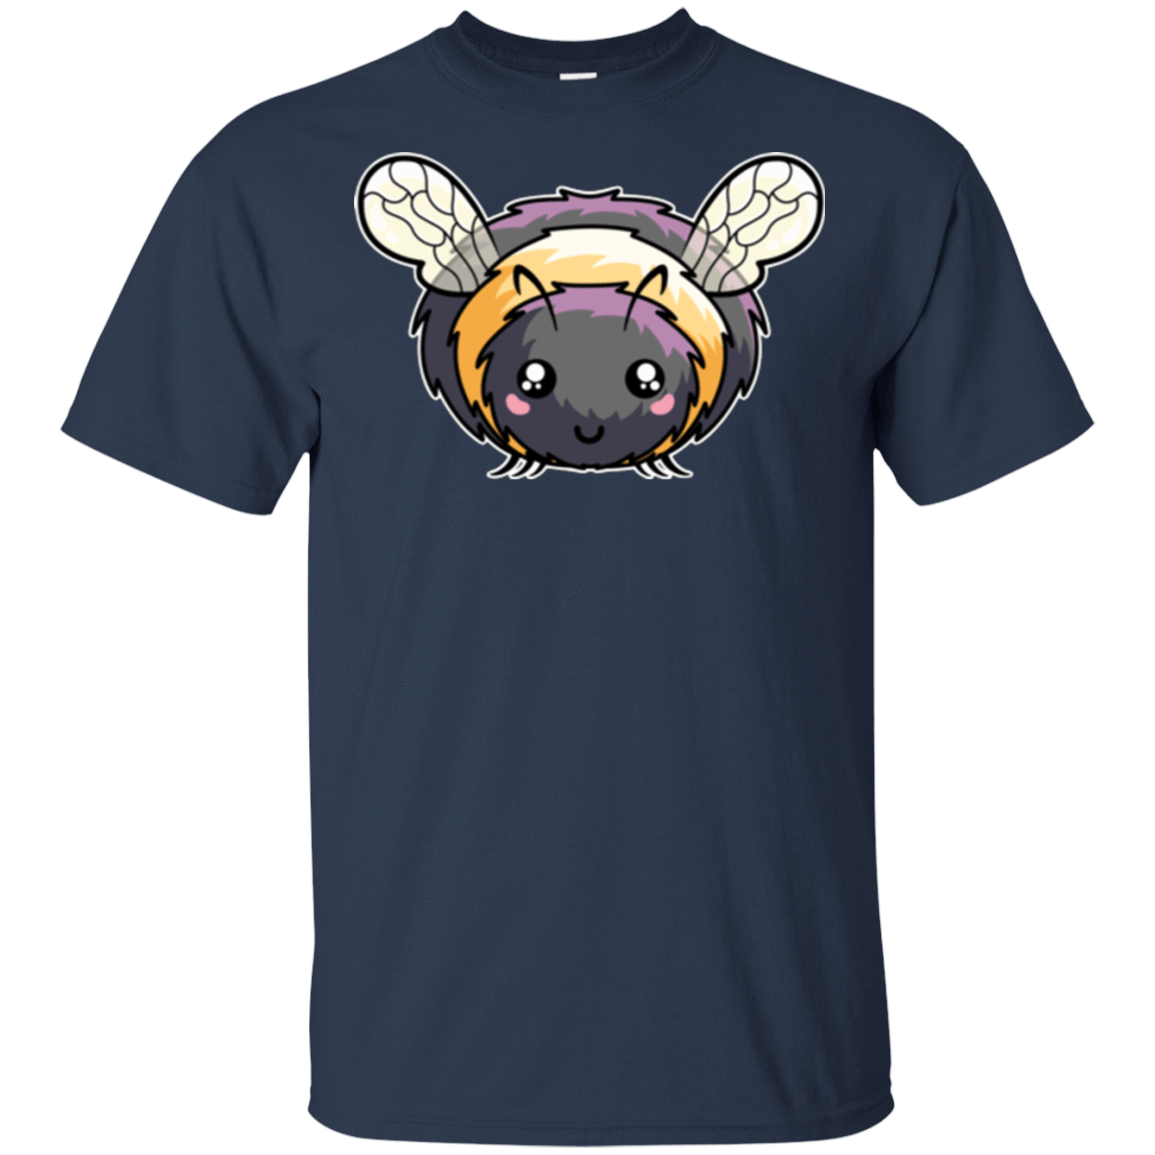 T-Shirts Navy / S Kawaii Cute Bee T-Shirt